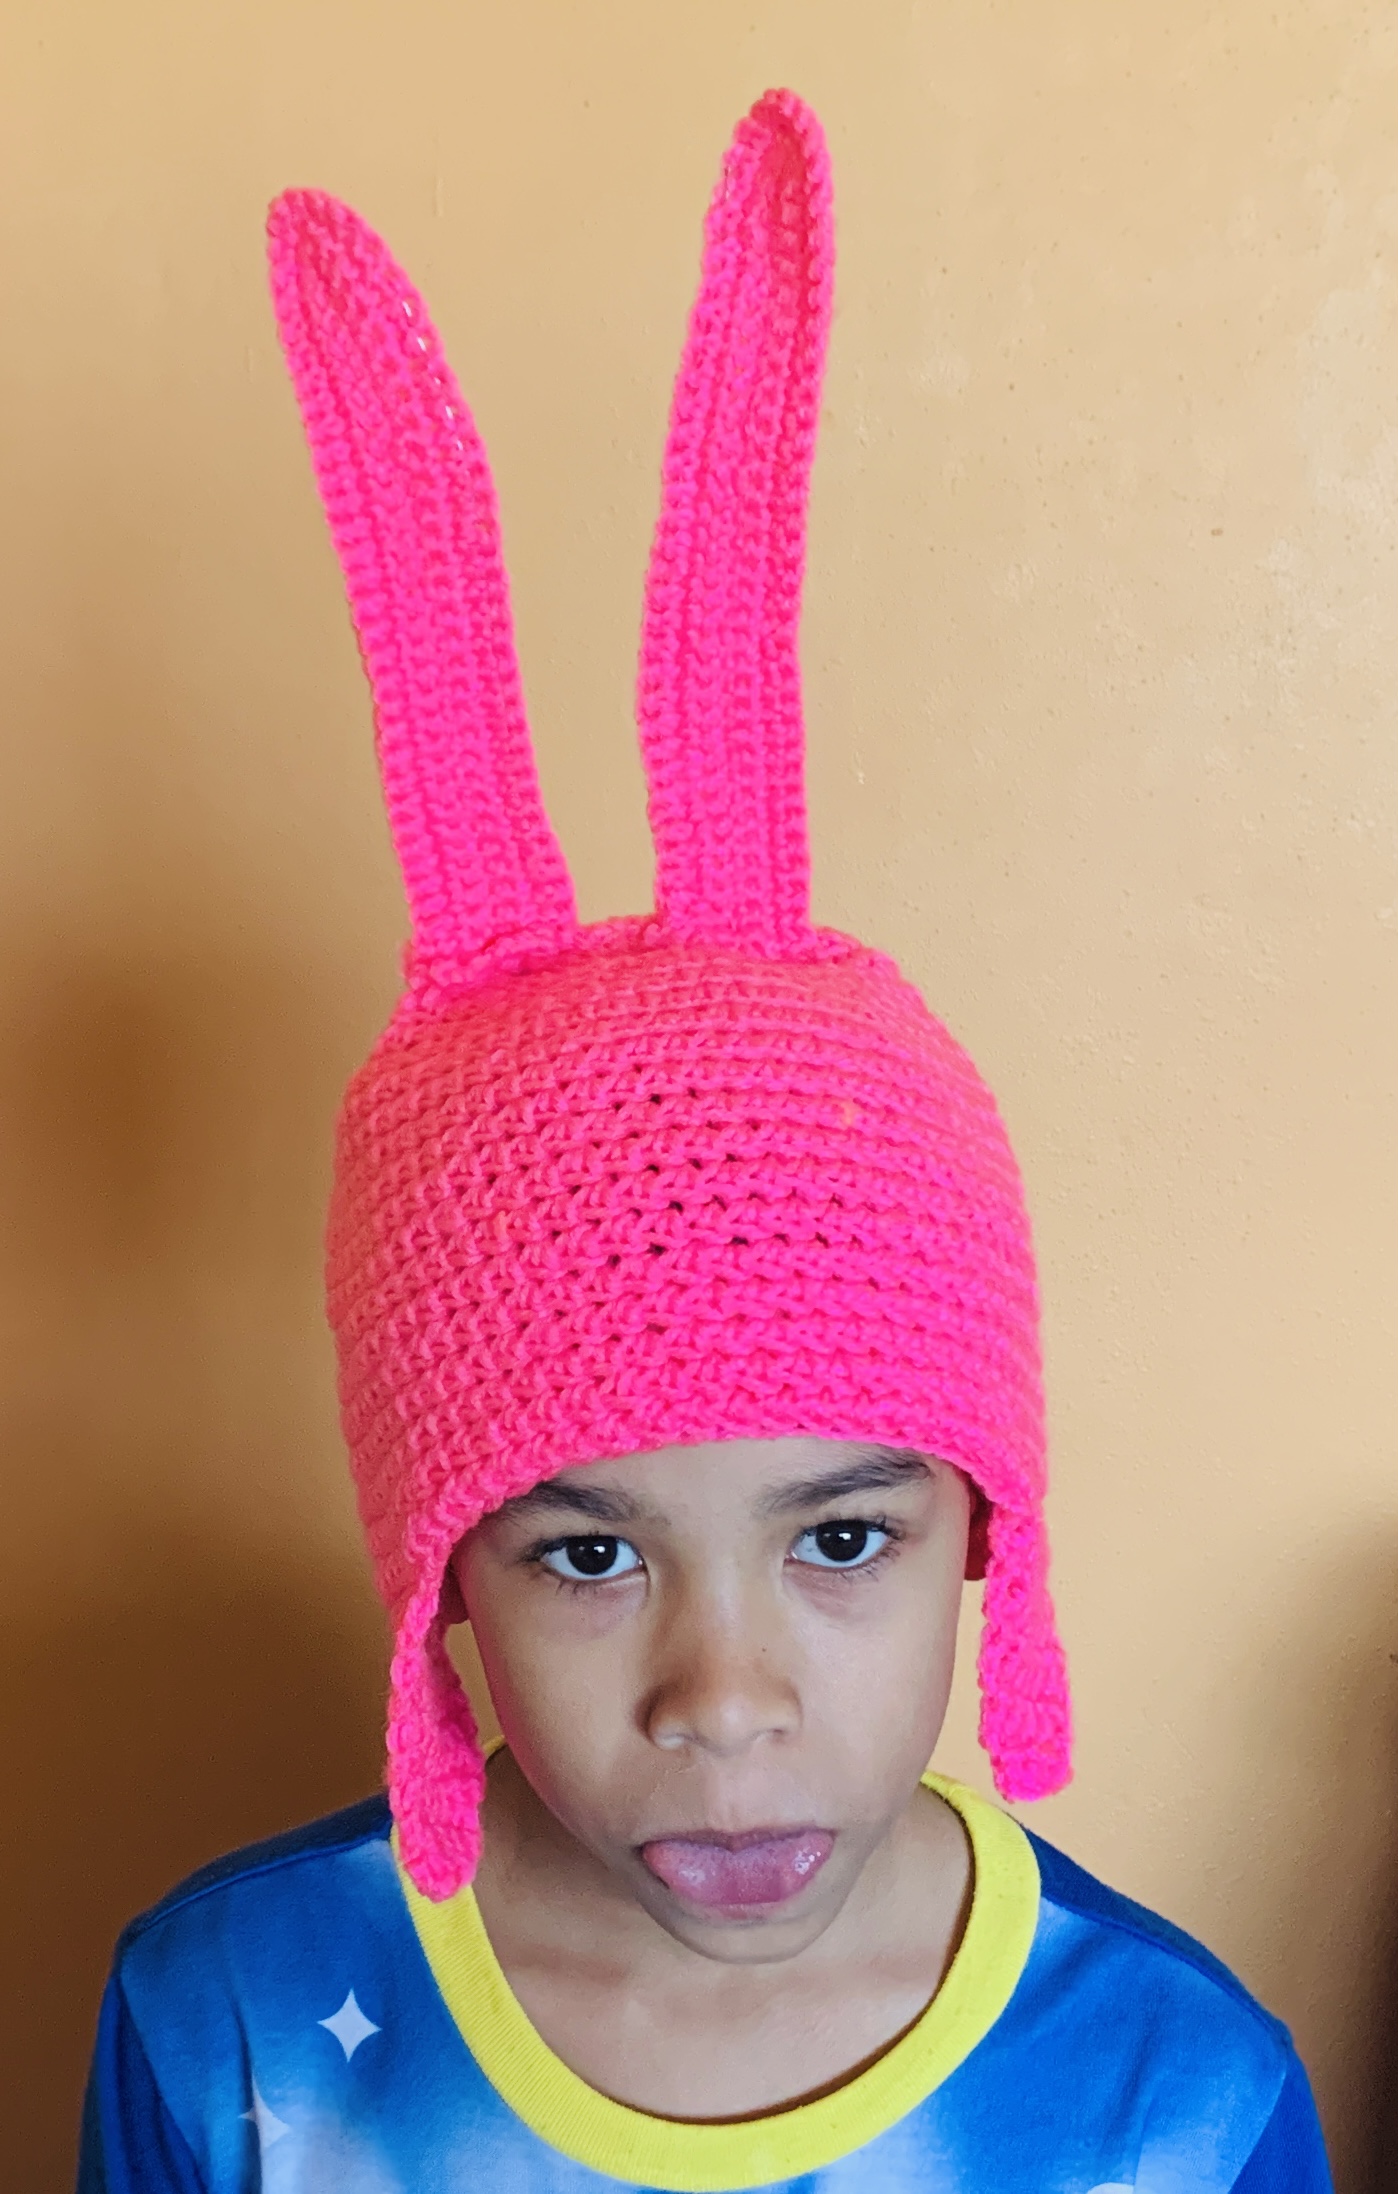 Jas K Crochet: Louise Belcher's Inspired Hat